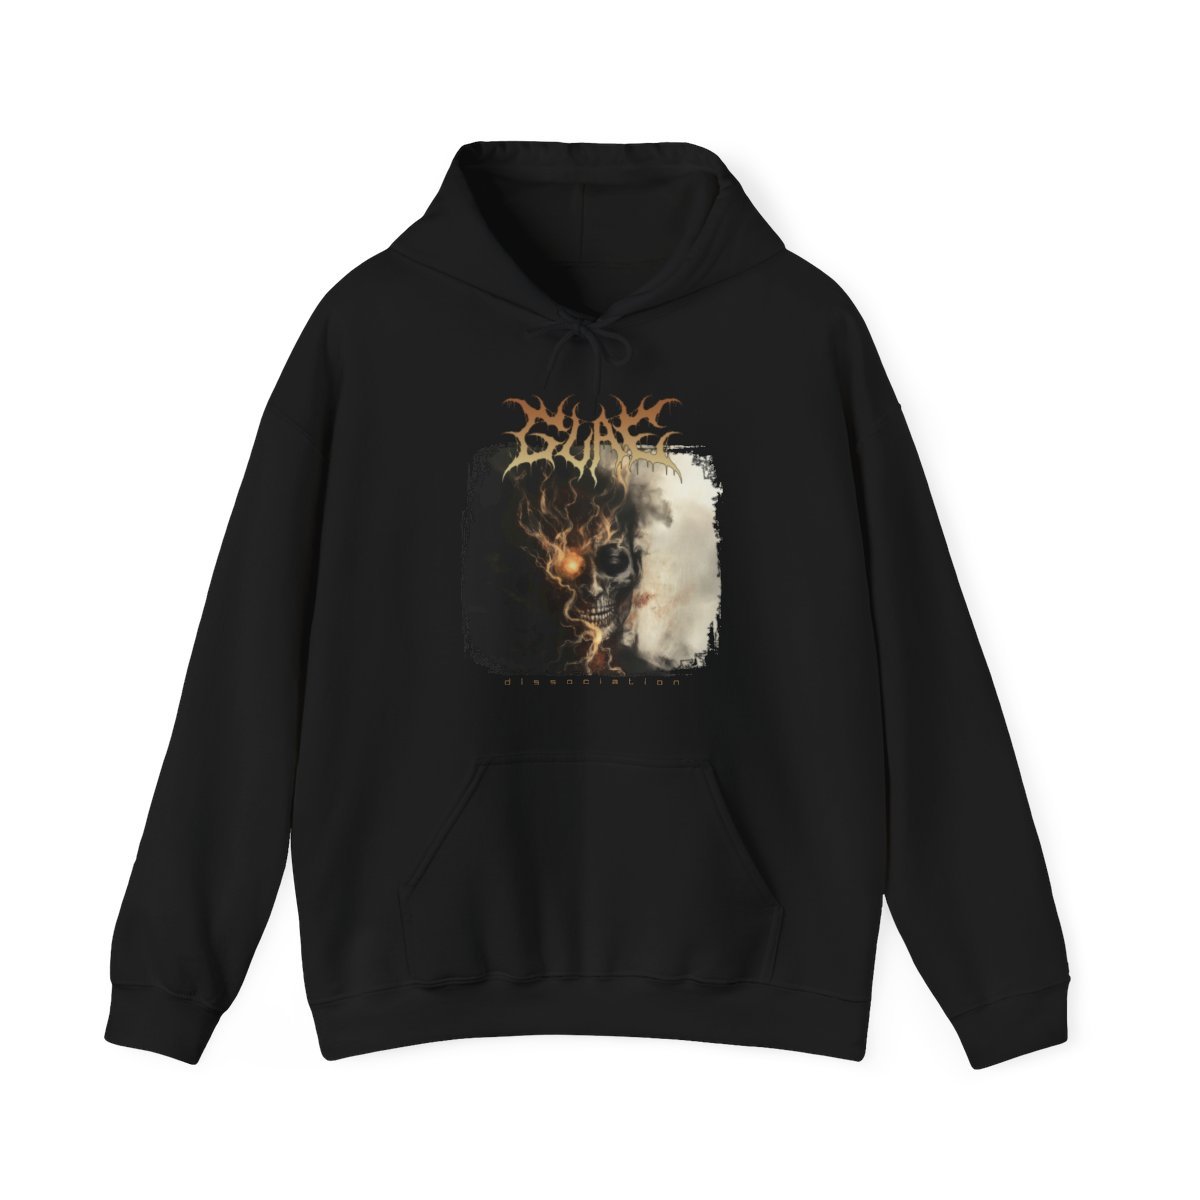 Glae – Dissociation Pullover Hooded Sweatshirt